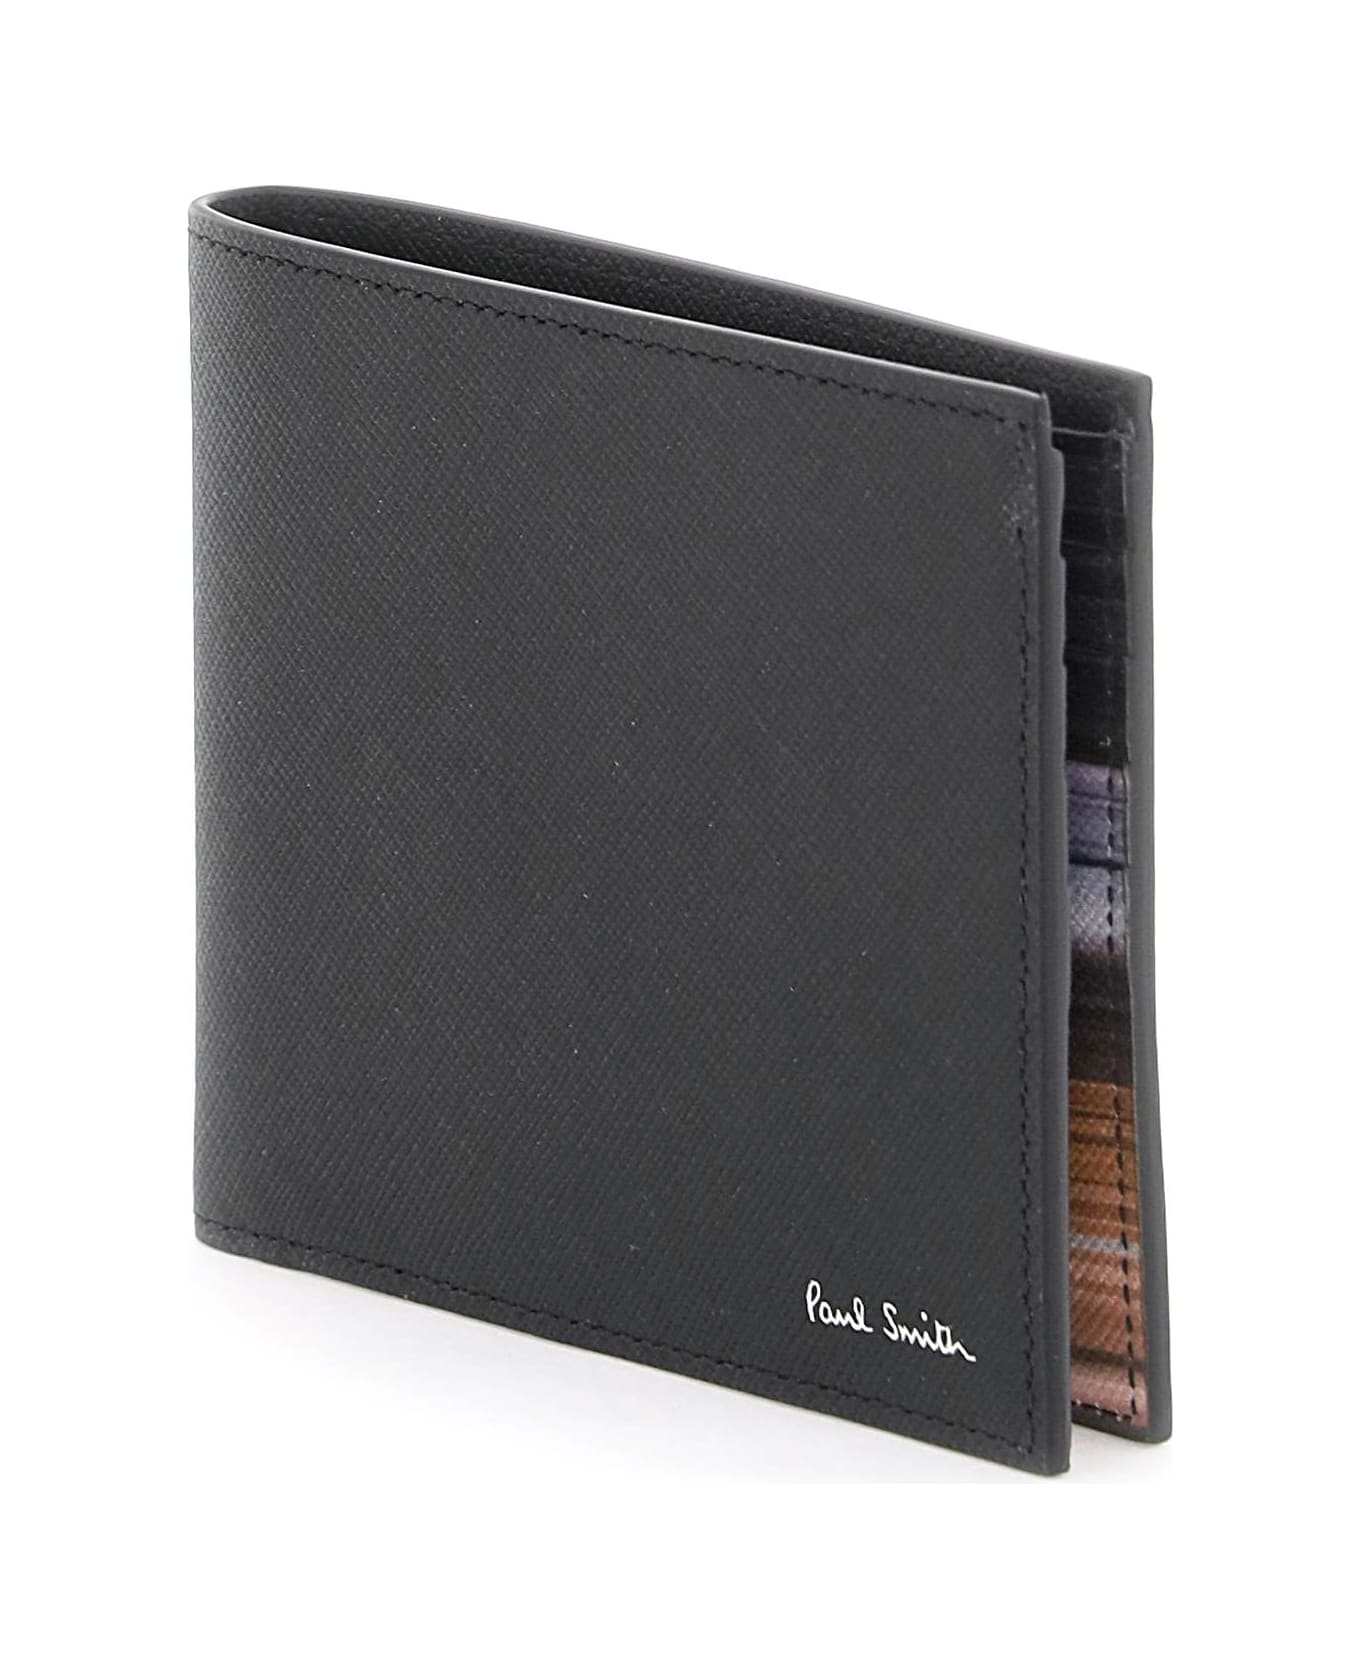 Paul Smith Mini Blur Wallet - BLACK (Black)